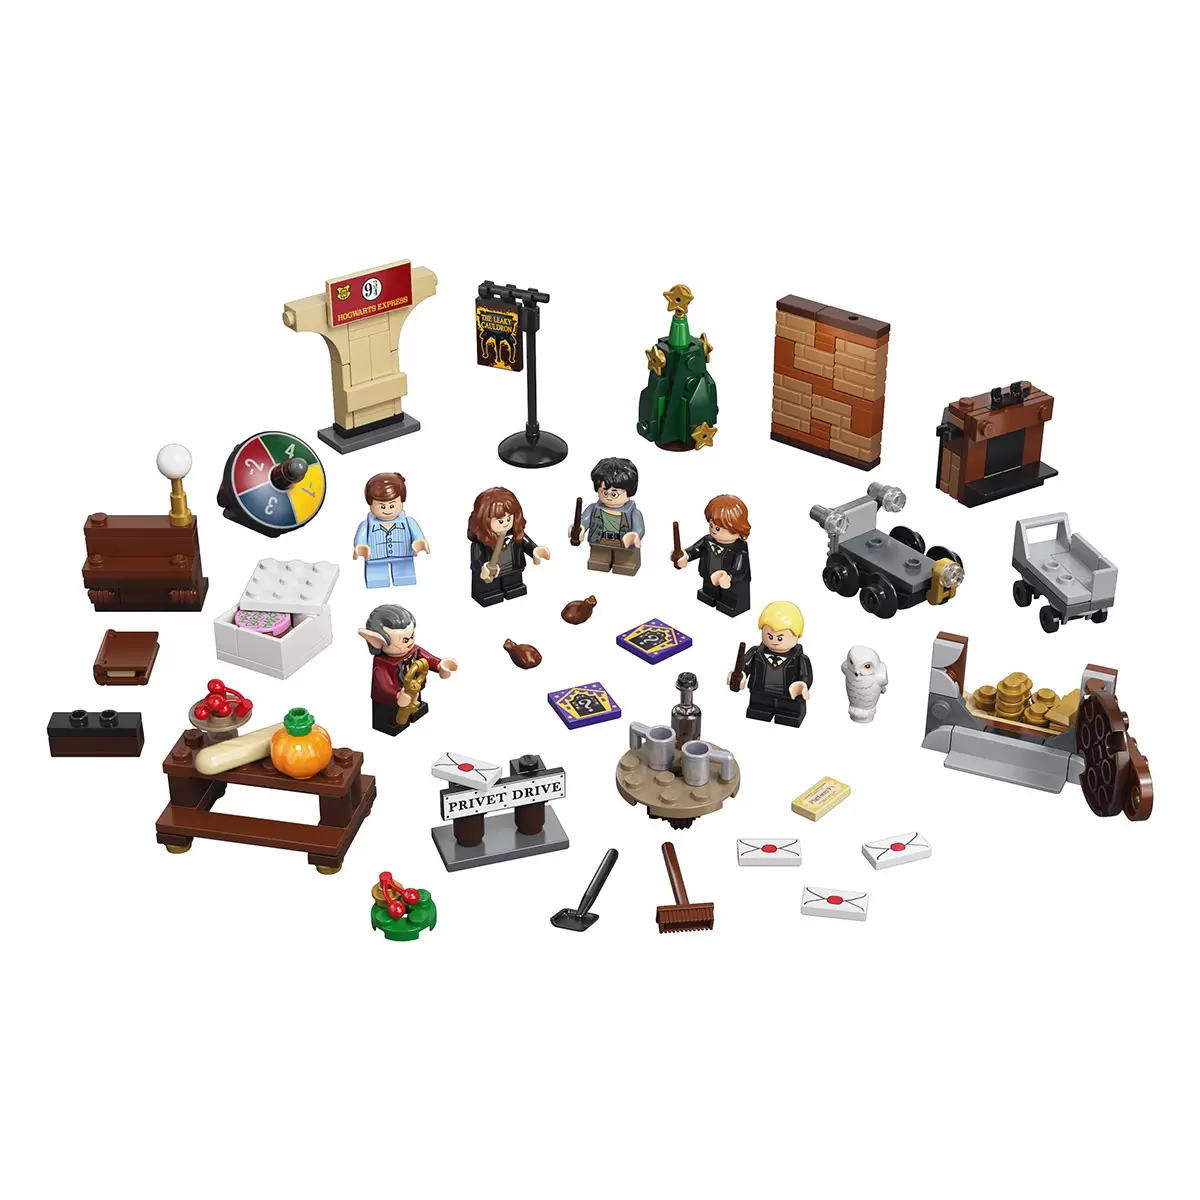 Buy LEGO Harry Potter Advent Calendar Items Image at Costco.co.uk